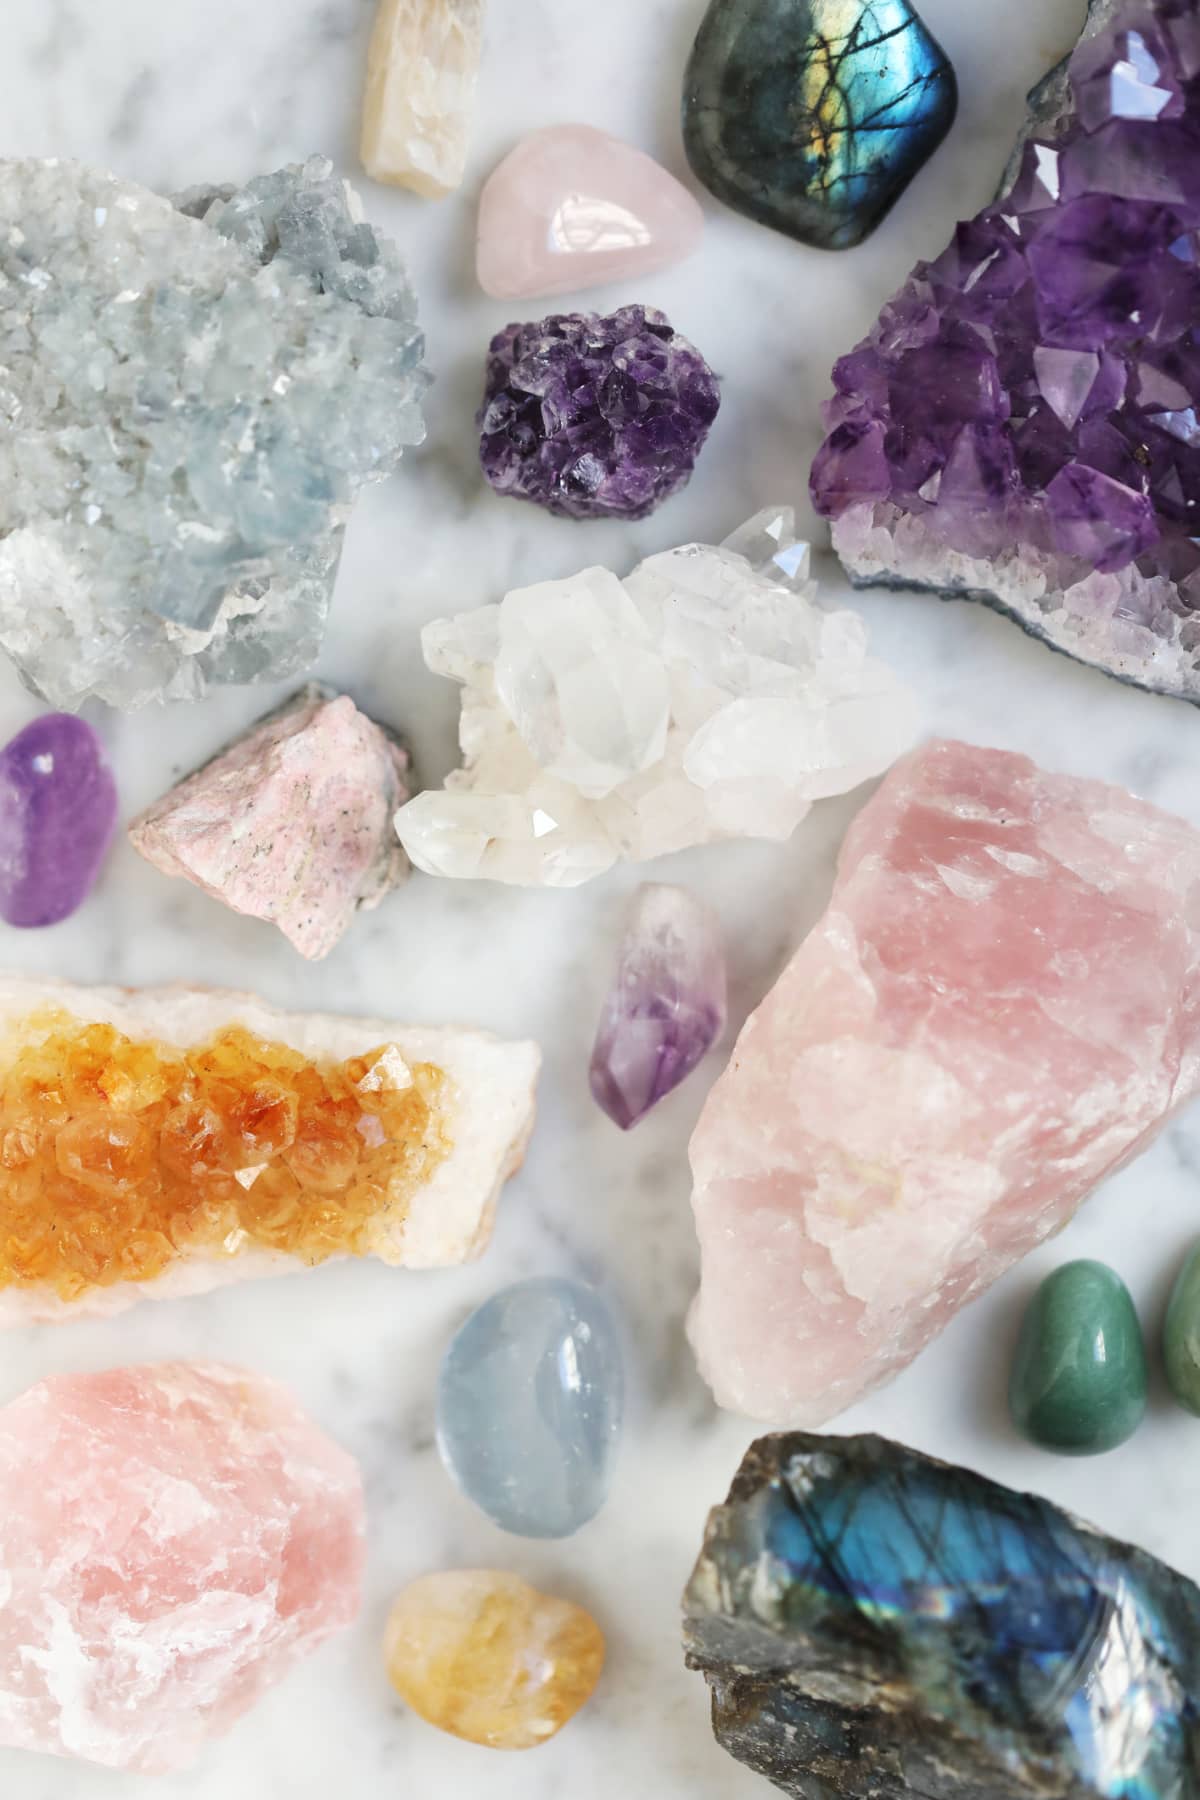 Amethyste, quartz rose, labradorite, citrine, celestine, pierre de lune, aventurine verte, rhodonite, quartz crystals on a marble countertop